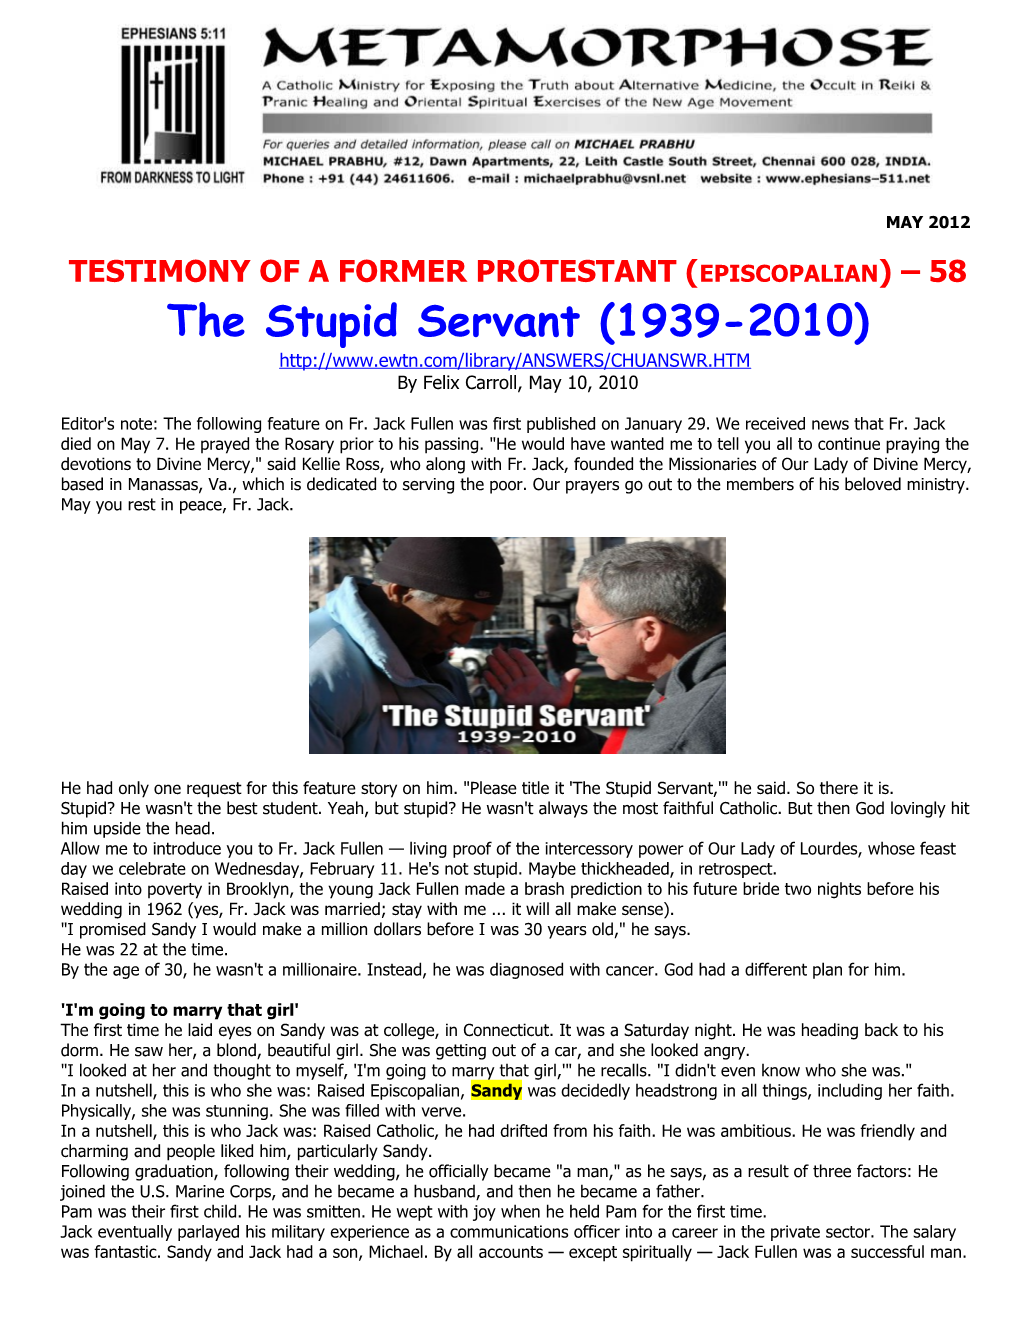 Testimony of a Former Protestant (Episcopalian) 58